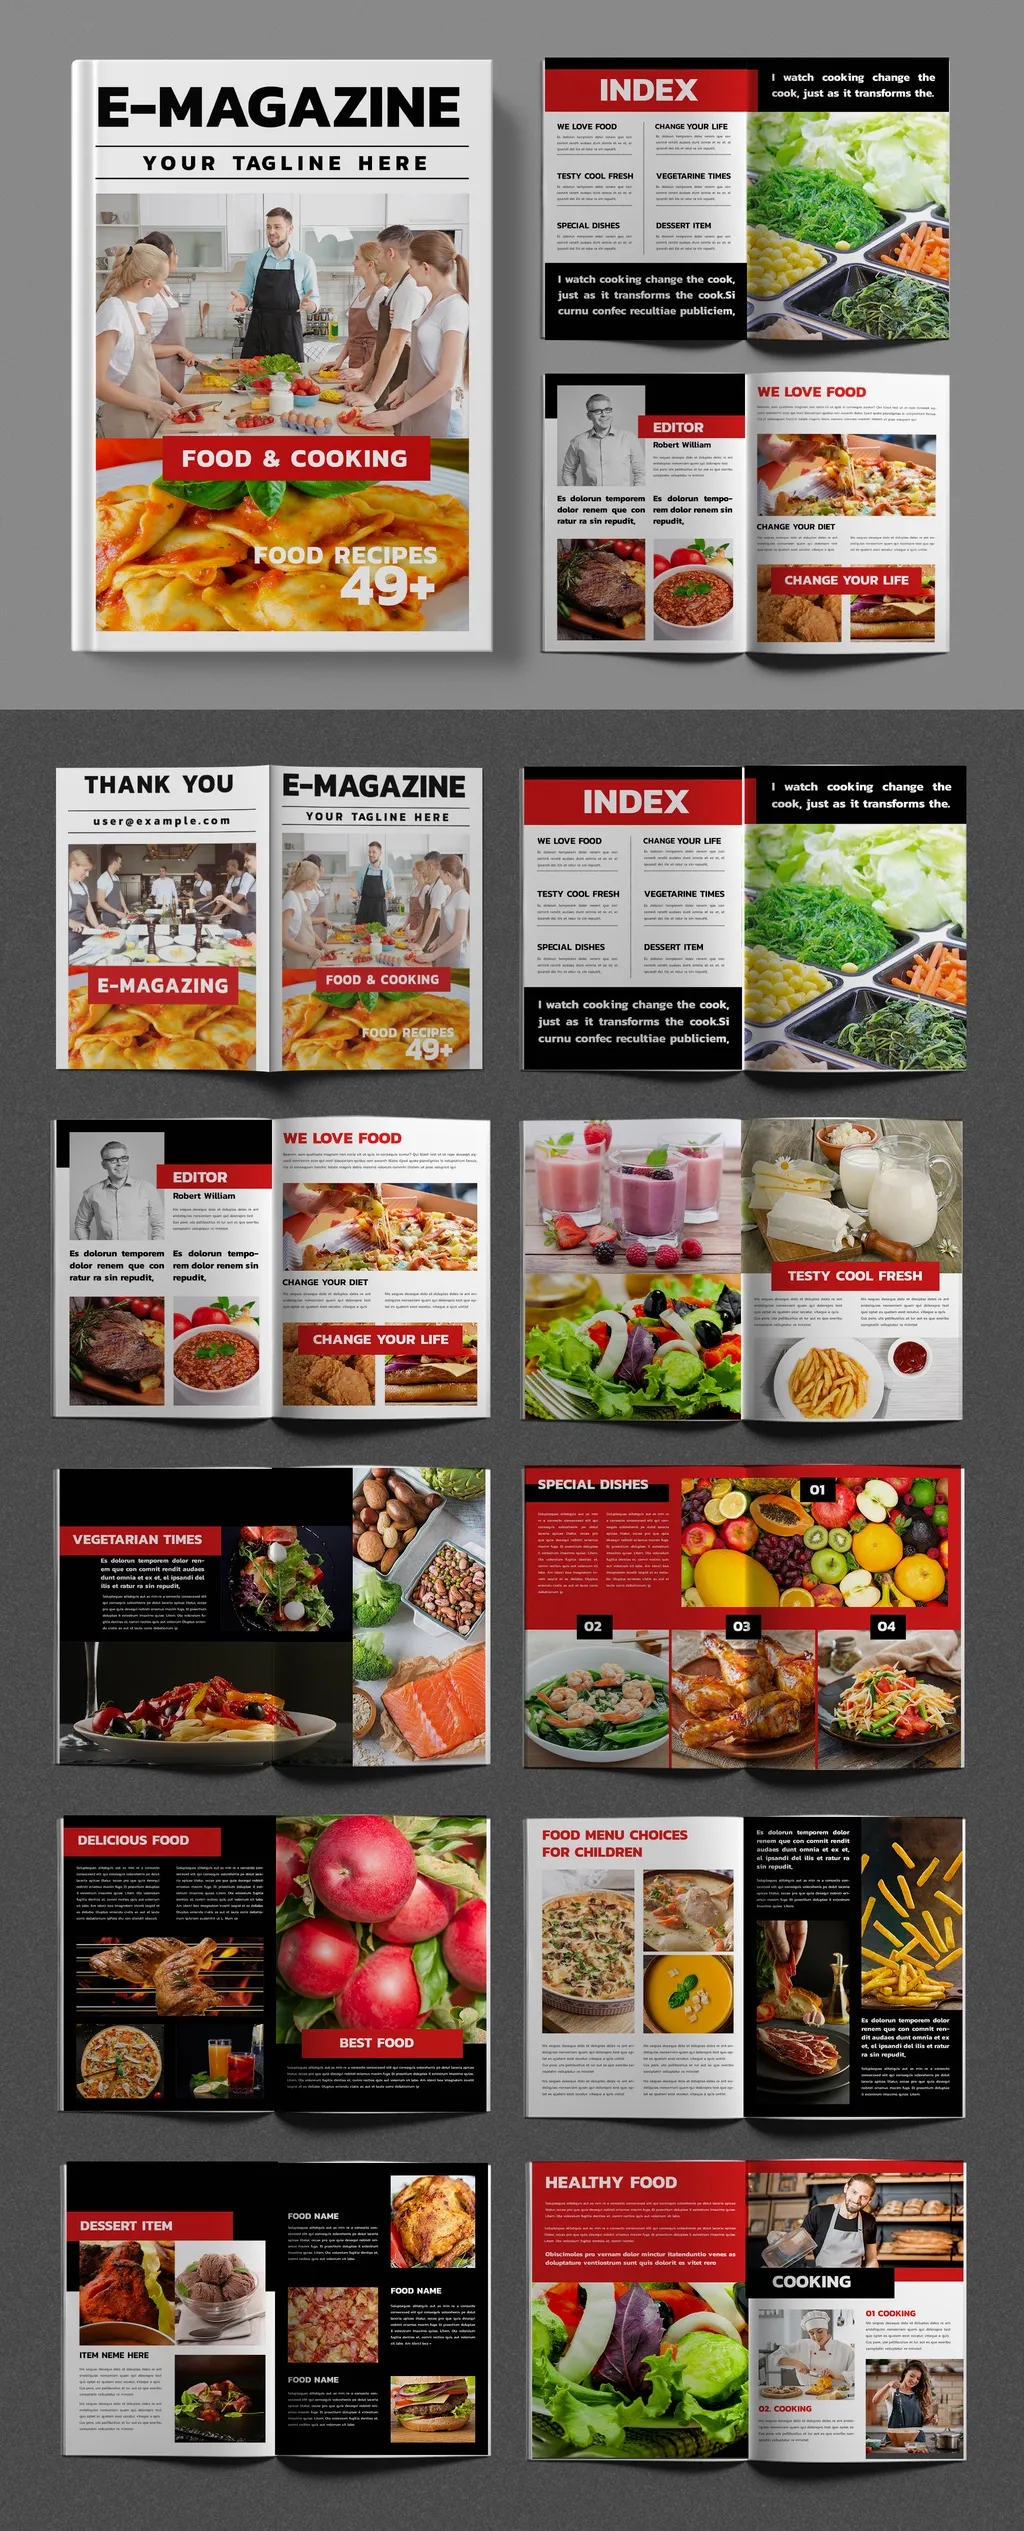 Adobestock - Cook Book Magazine Design 718545644